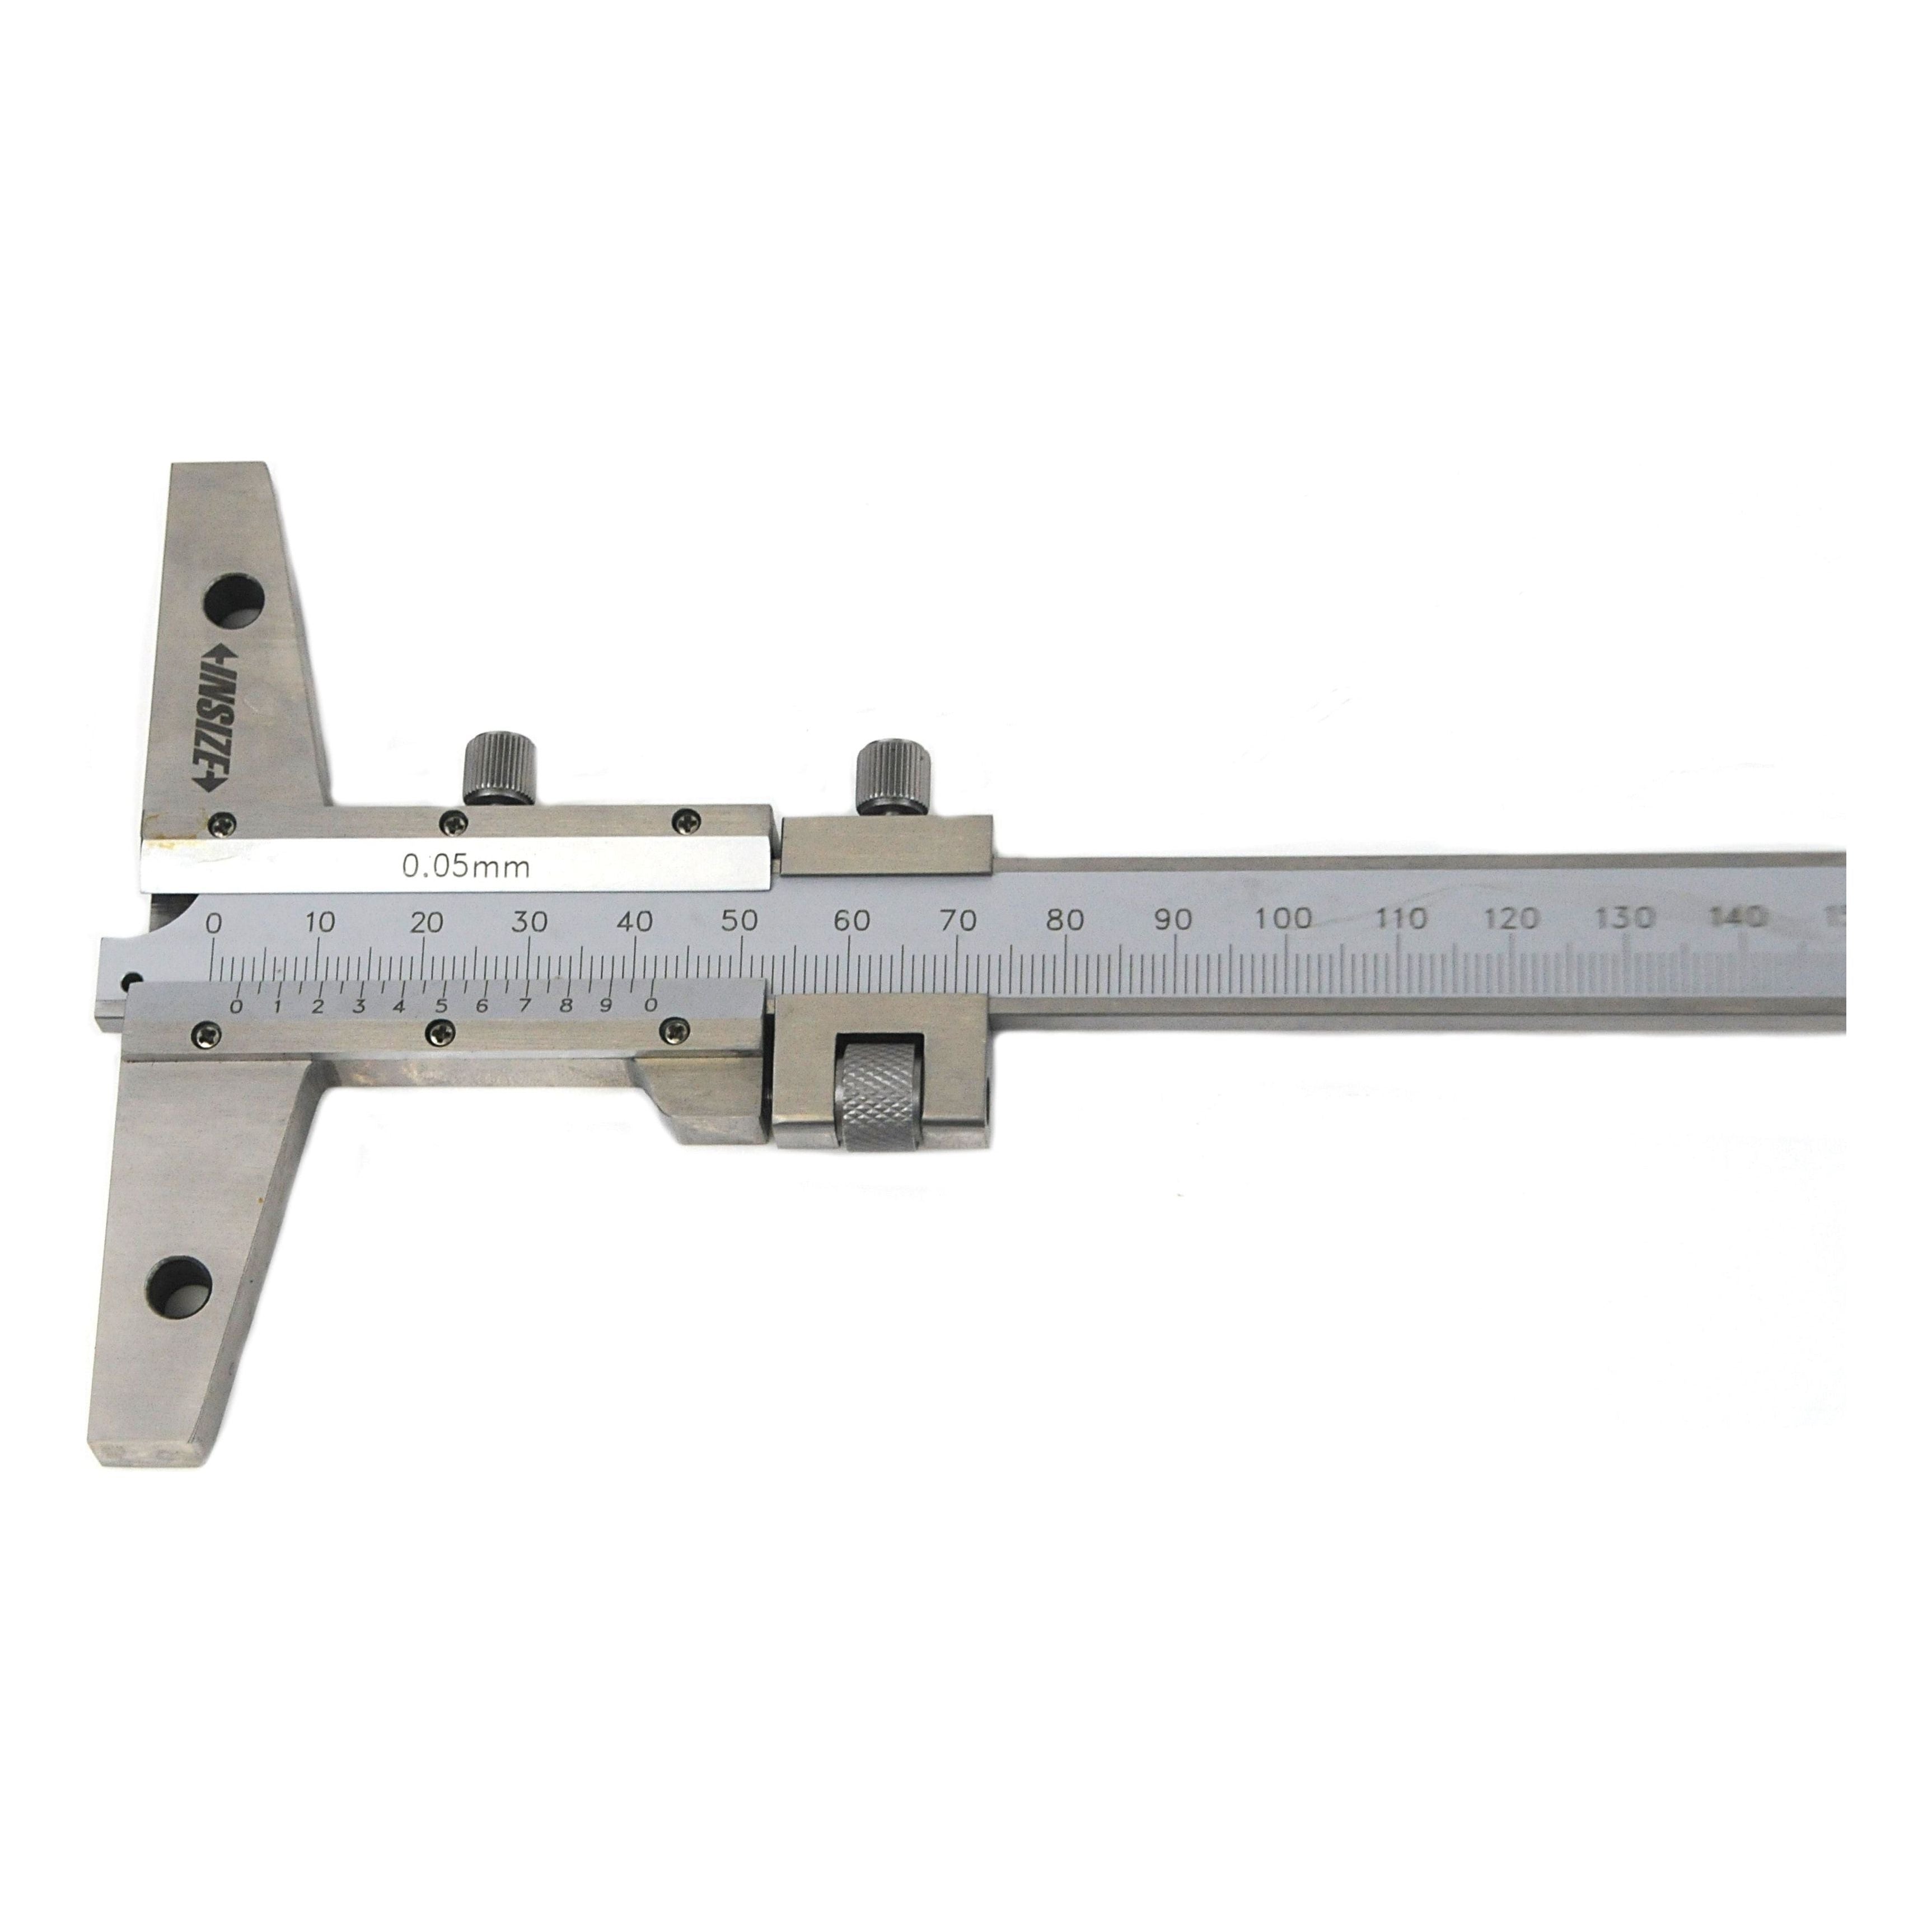 Insize Vernier Depth Gauge 0-200mm Range Series 1249-200